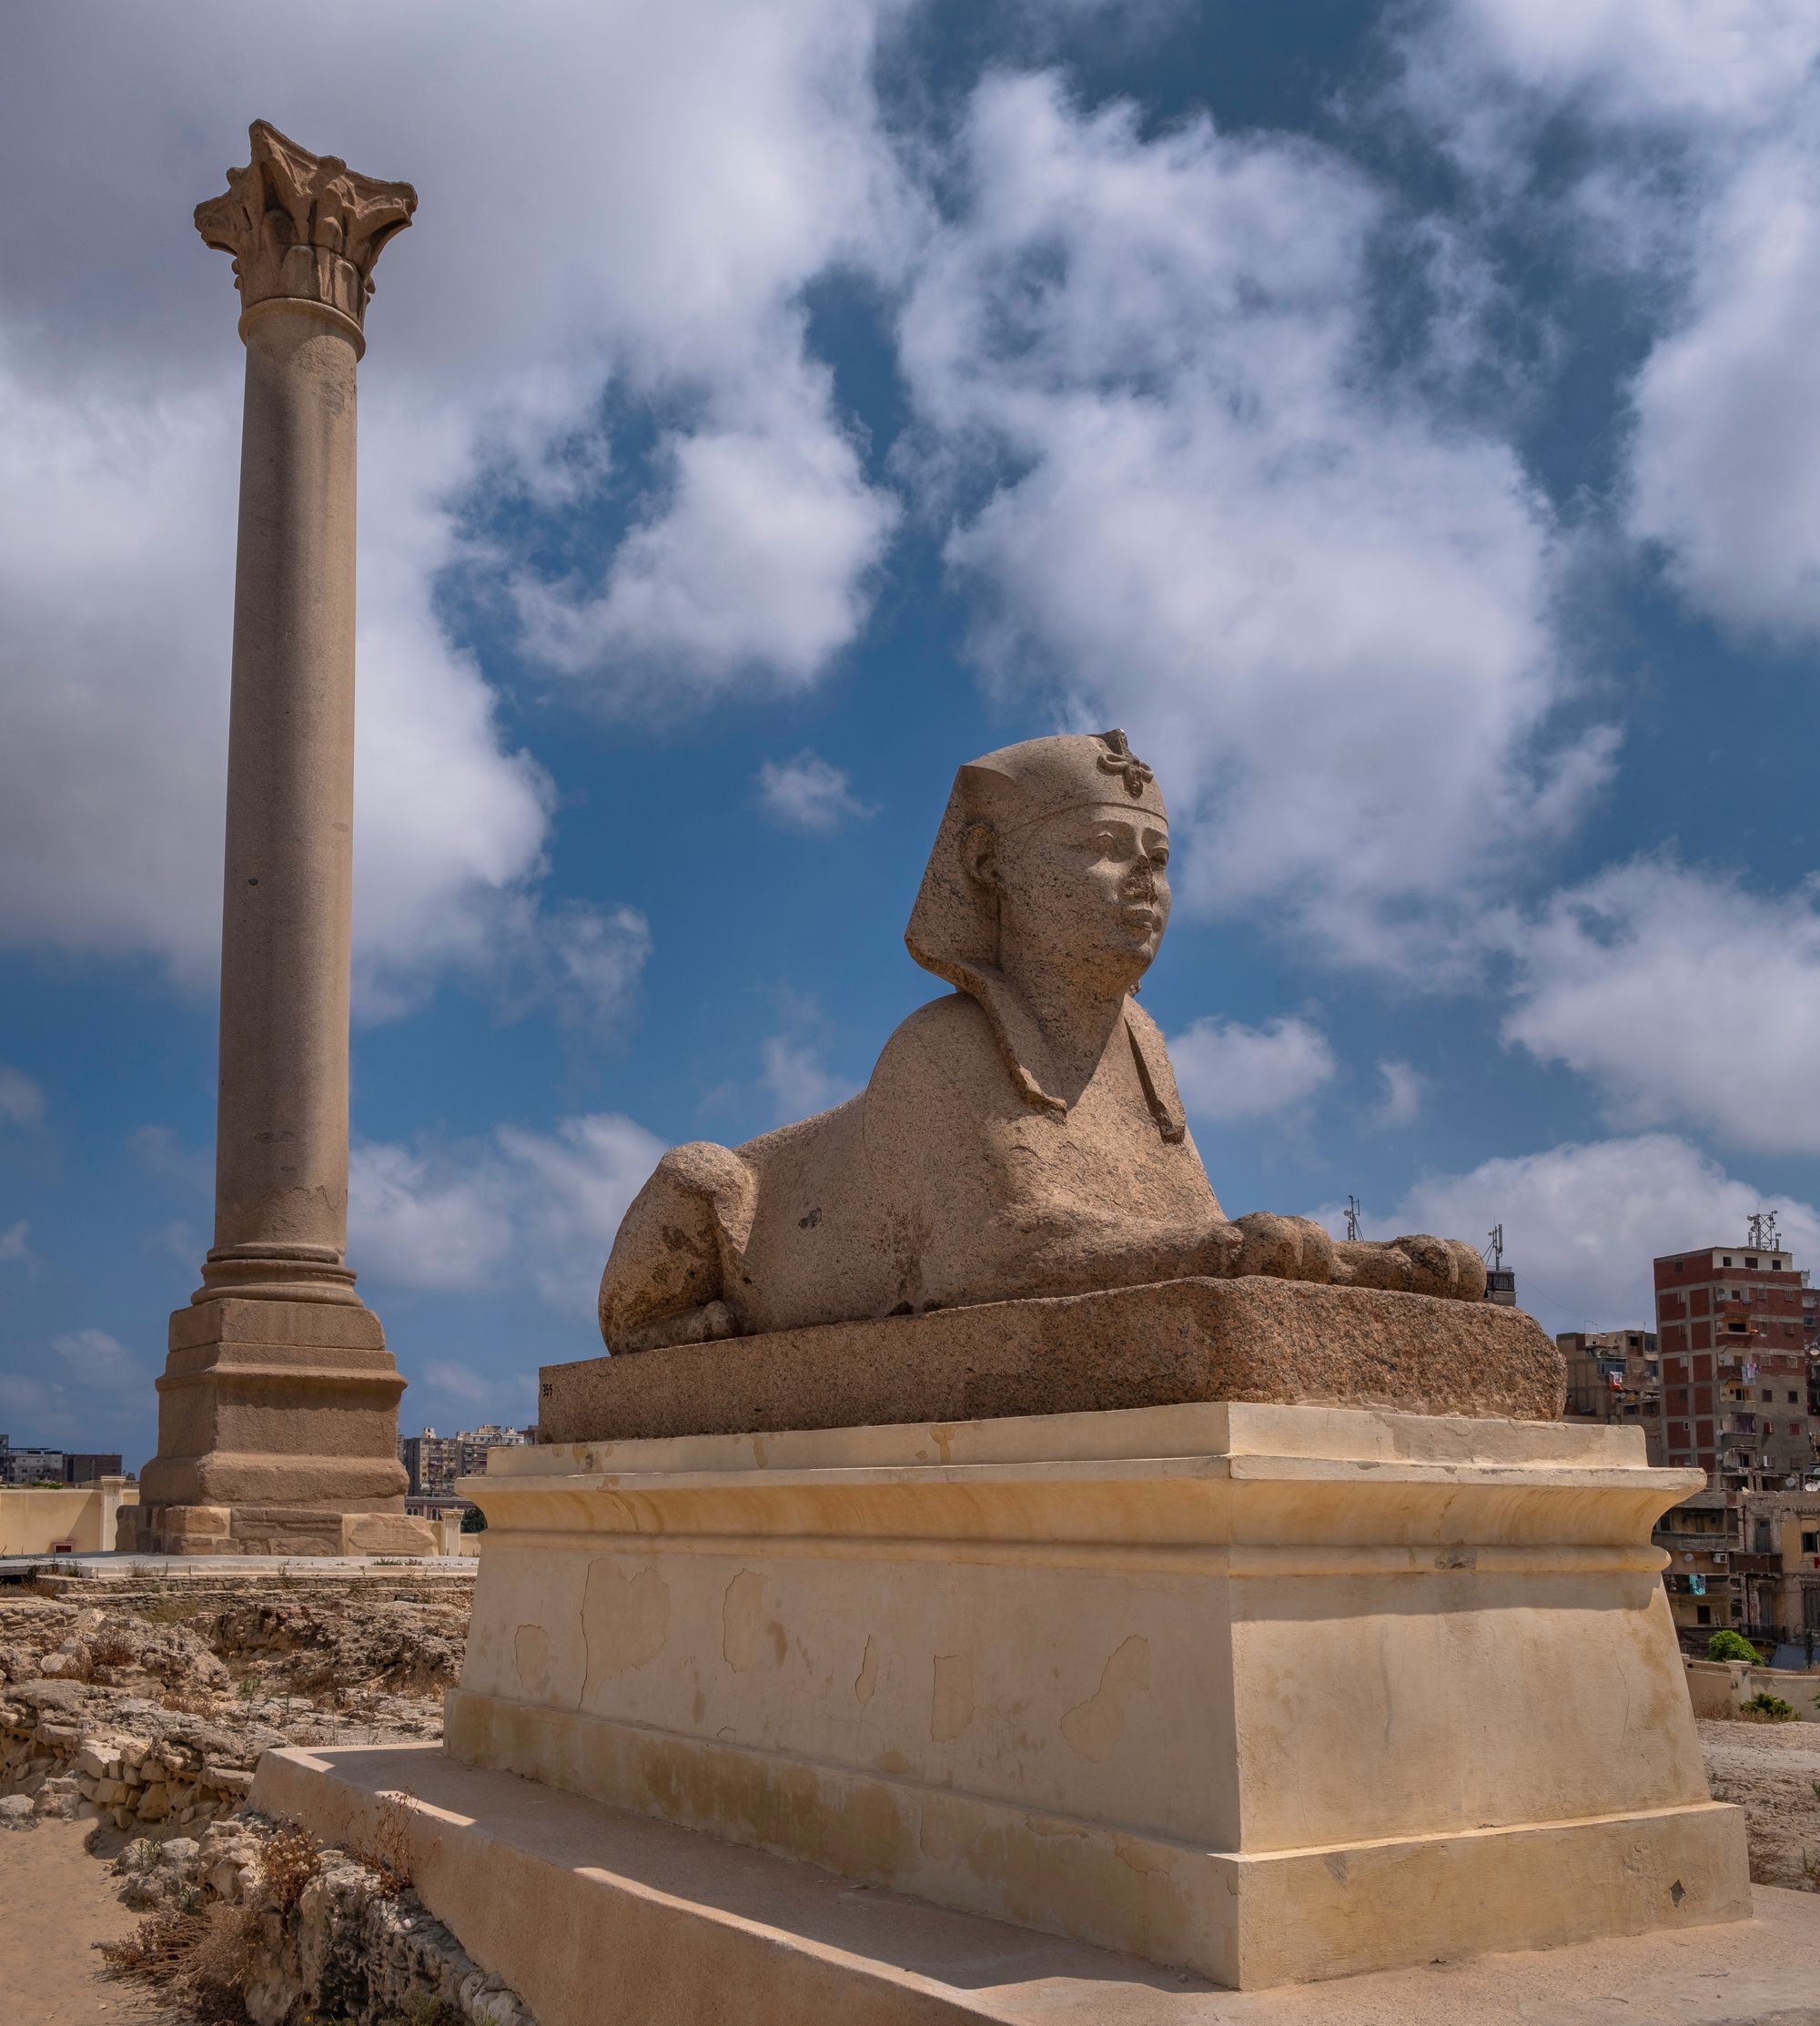 Pompey's Pillar and Sphinx at Serapeum of Alexandria, Egypt